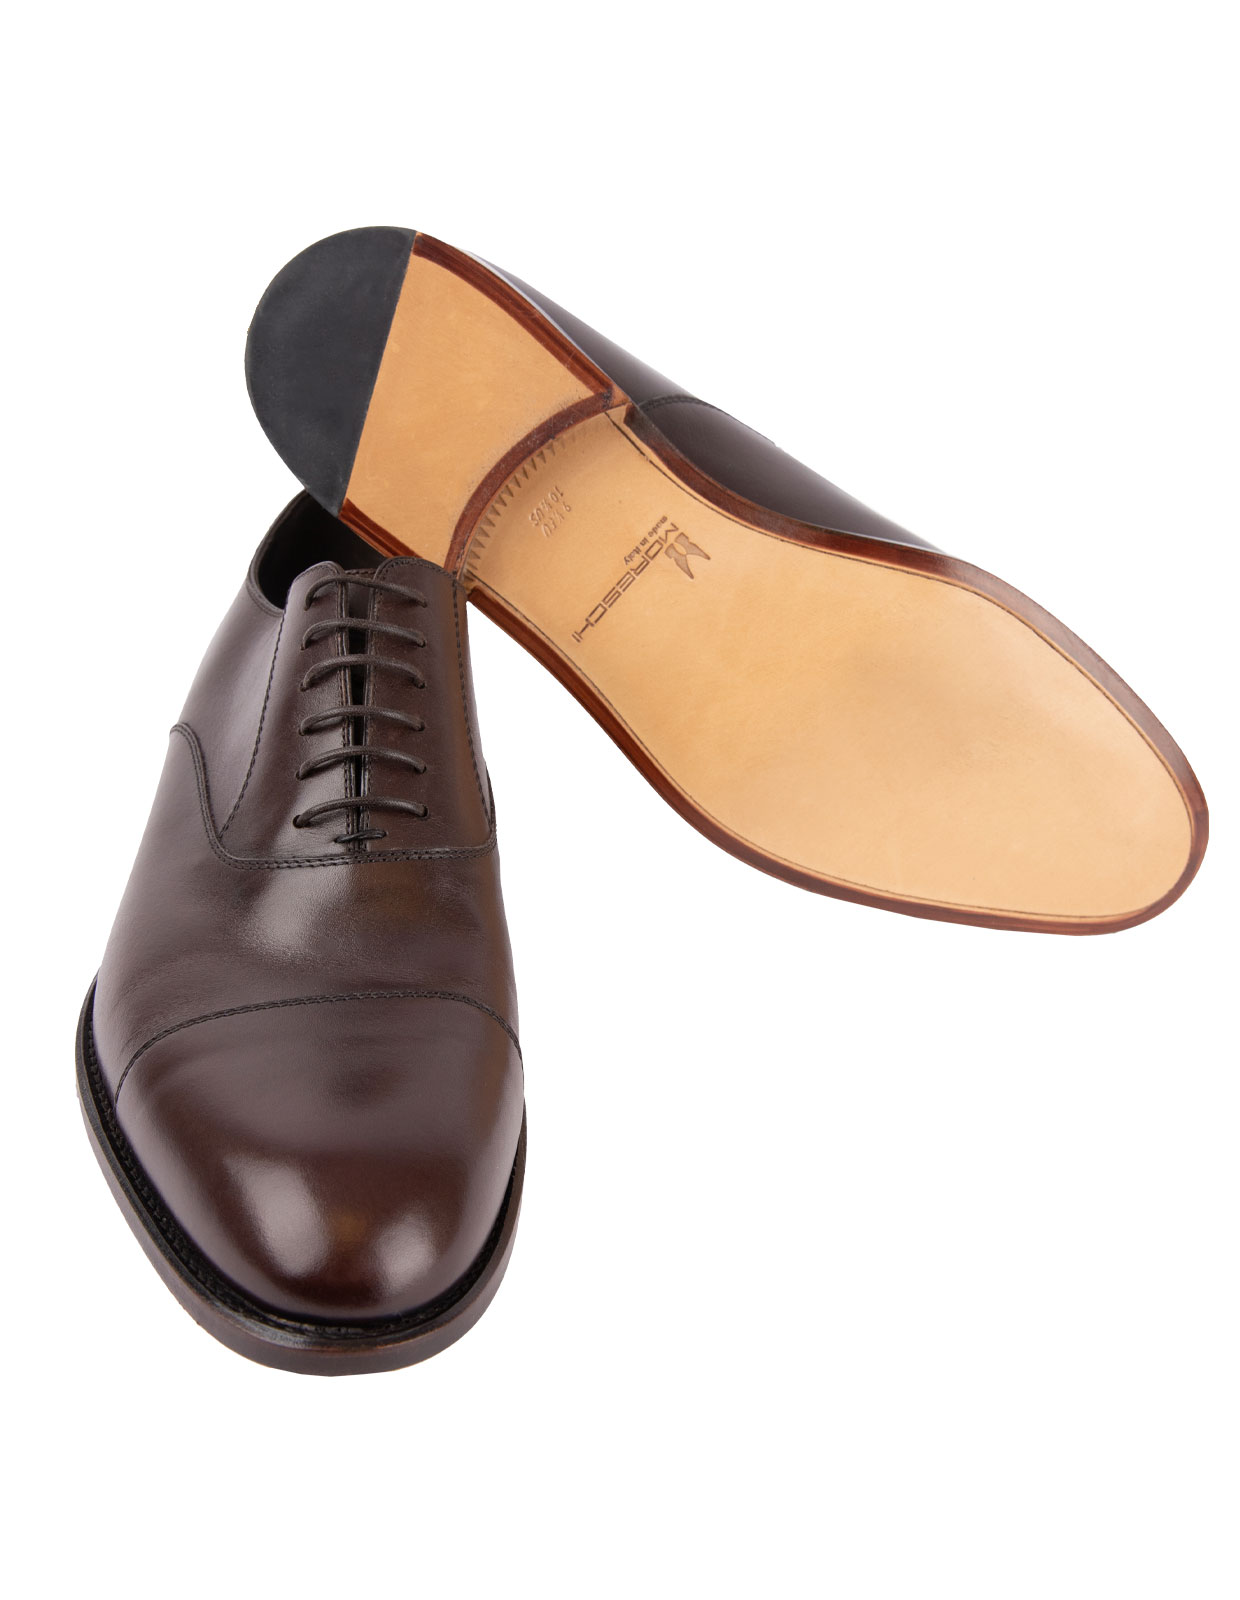 New York Oxford Shoes Calfskin Brown Stl 7